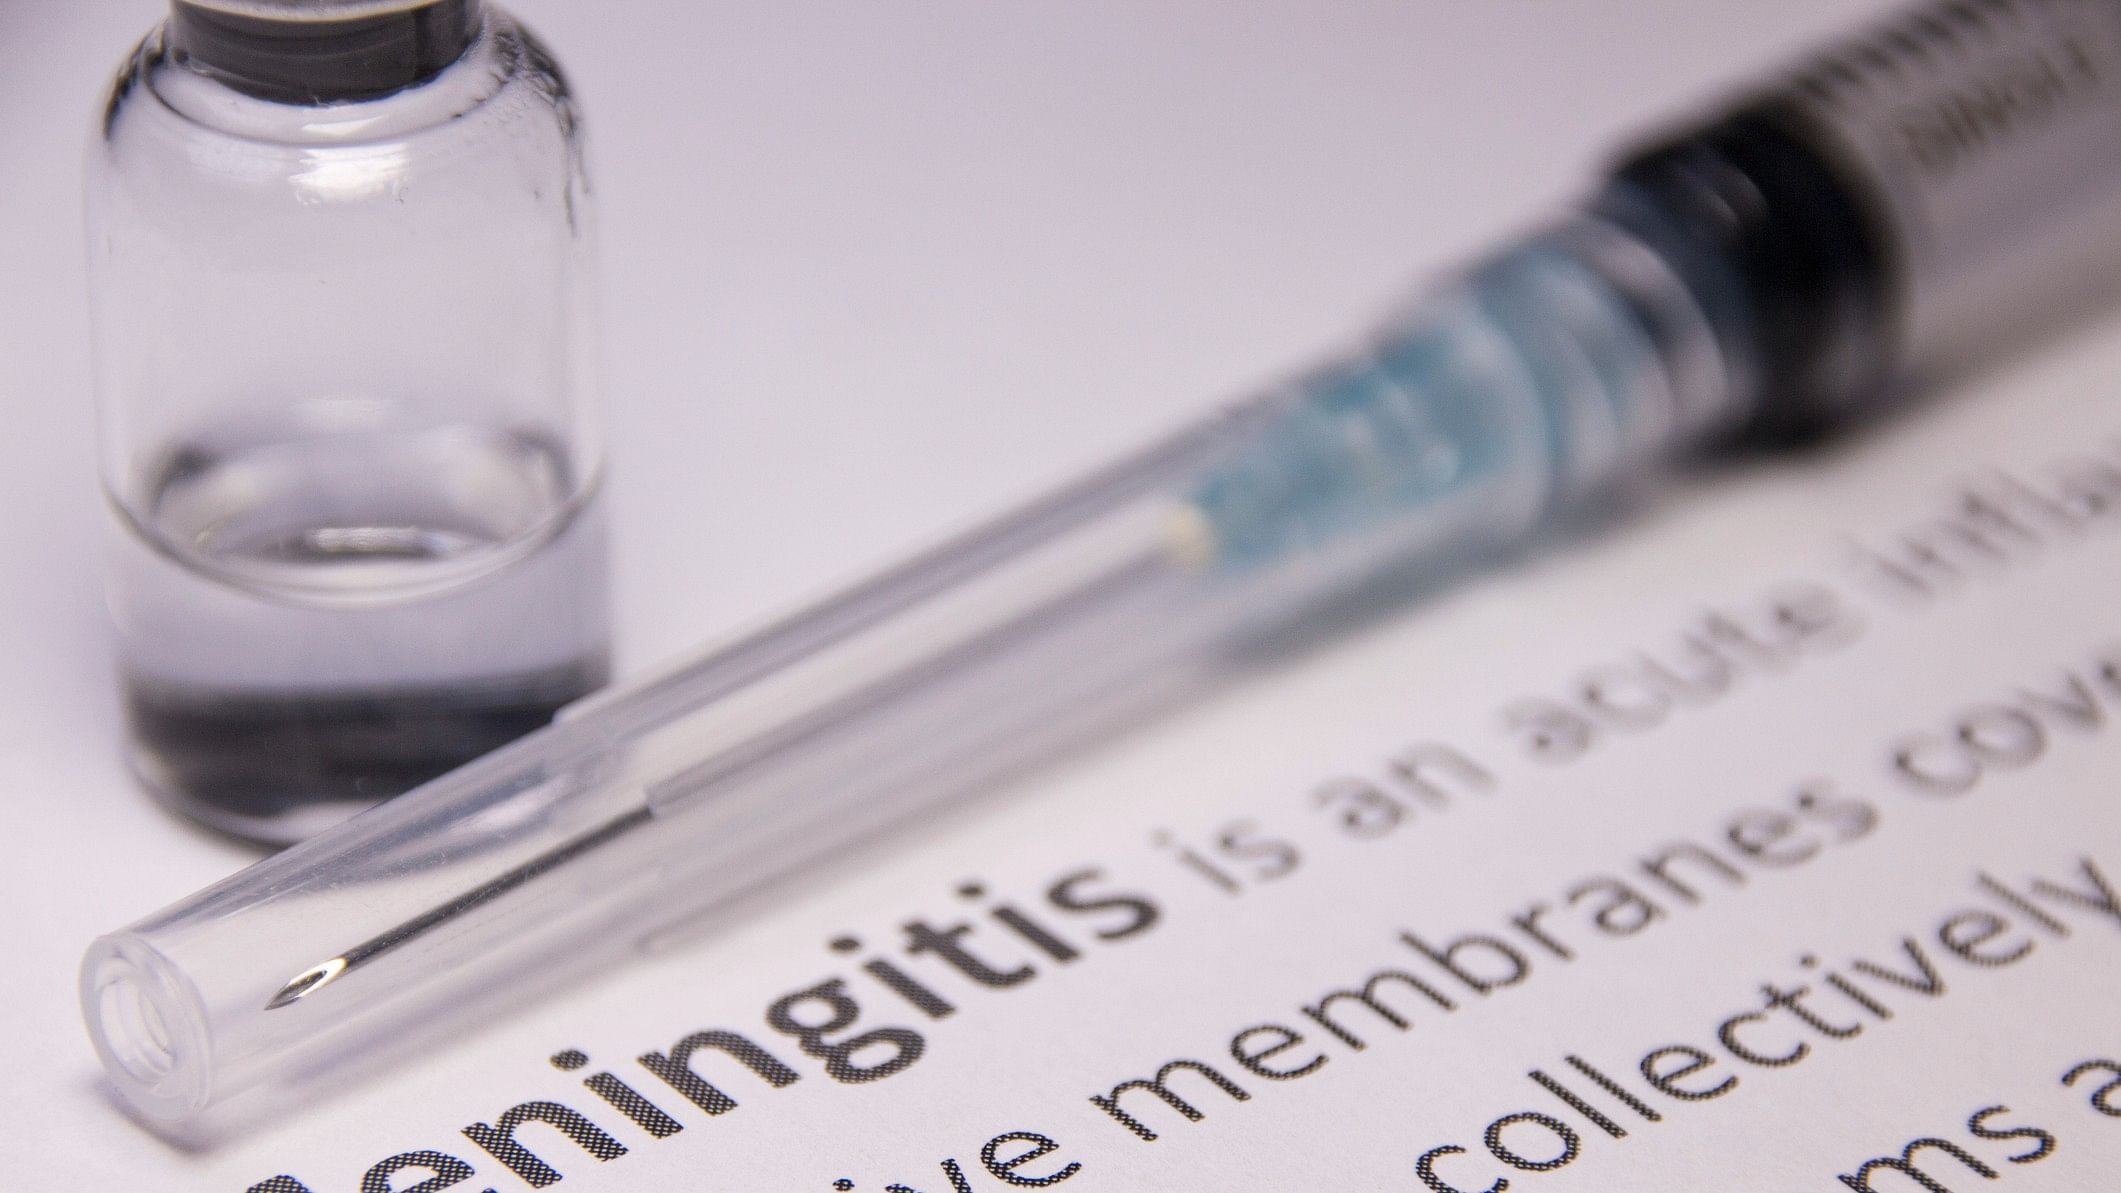 <div class="paragraphs"><p>Representative image showing a meningitis vaccine</p></div>